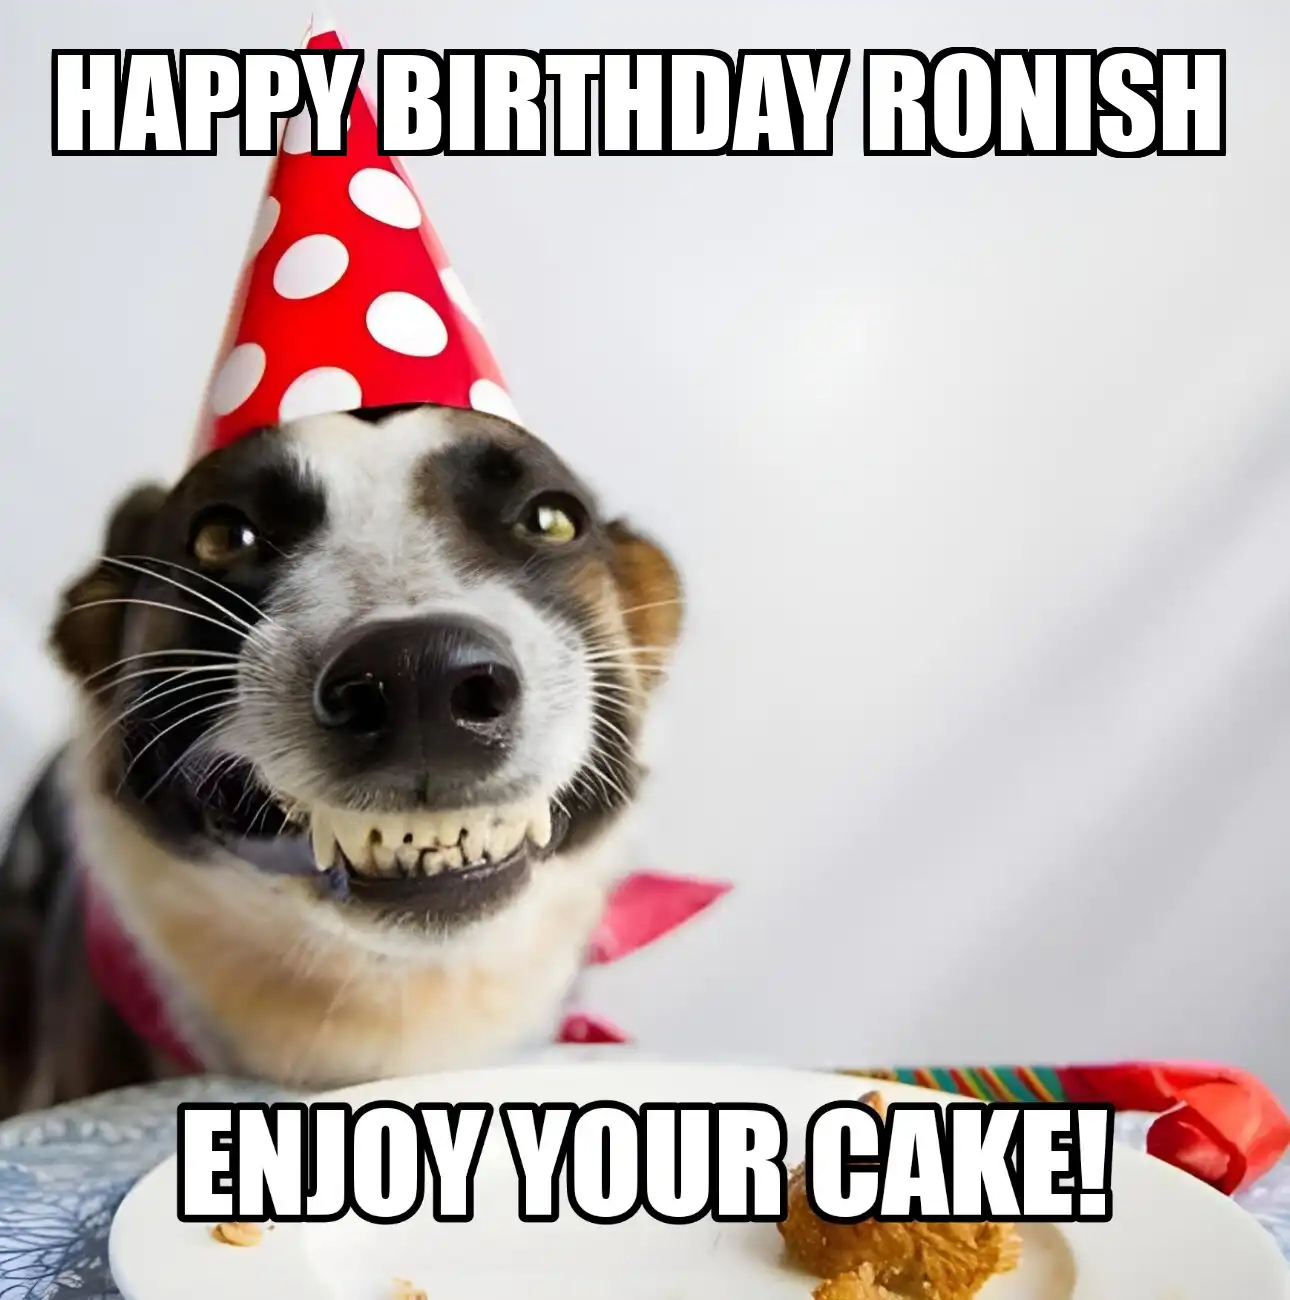 Happy Birthday Ronish Enjoy Your Cake Dog Meme